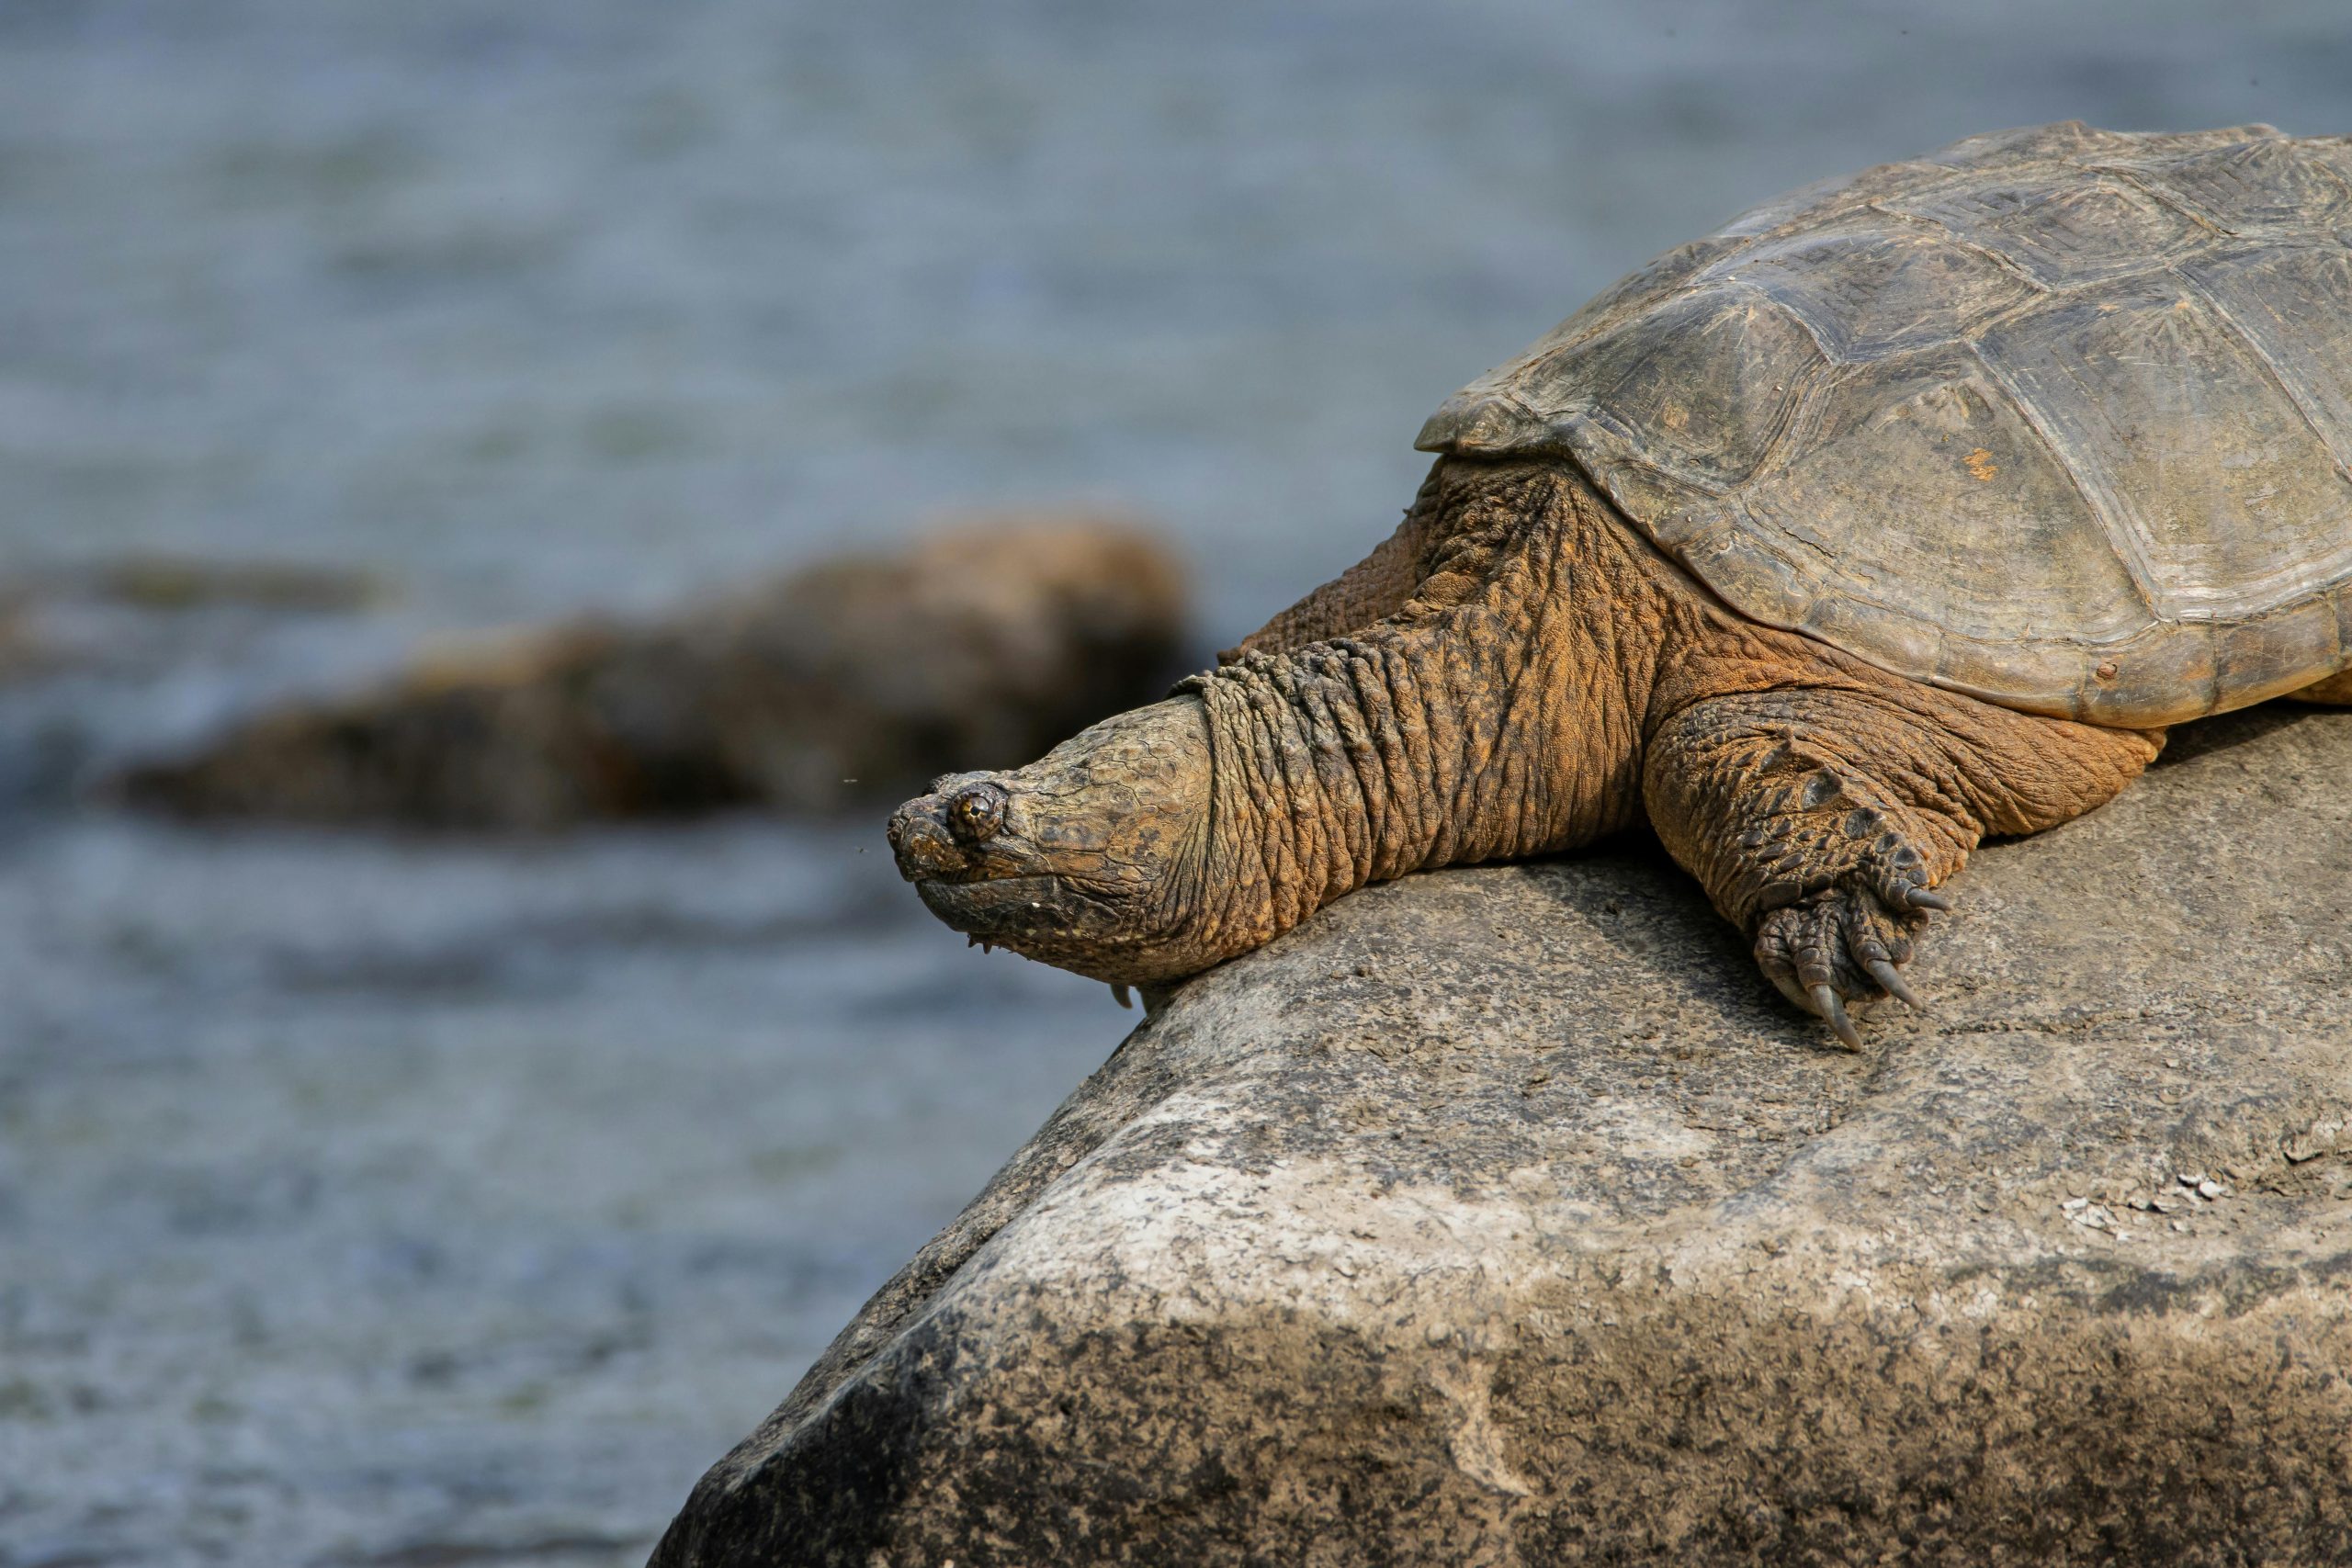 Musk Turtle Lifespan: How Long Do Musk Turtles Live?